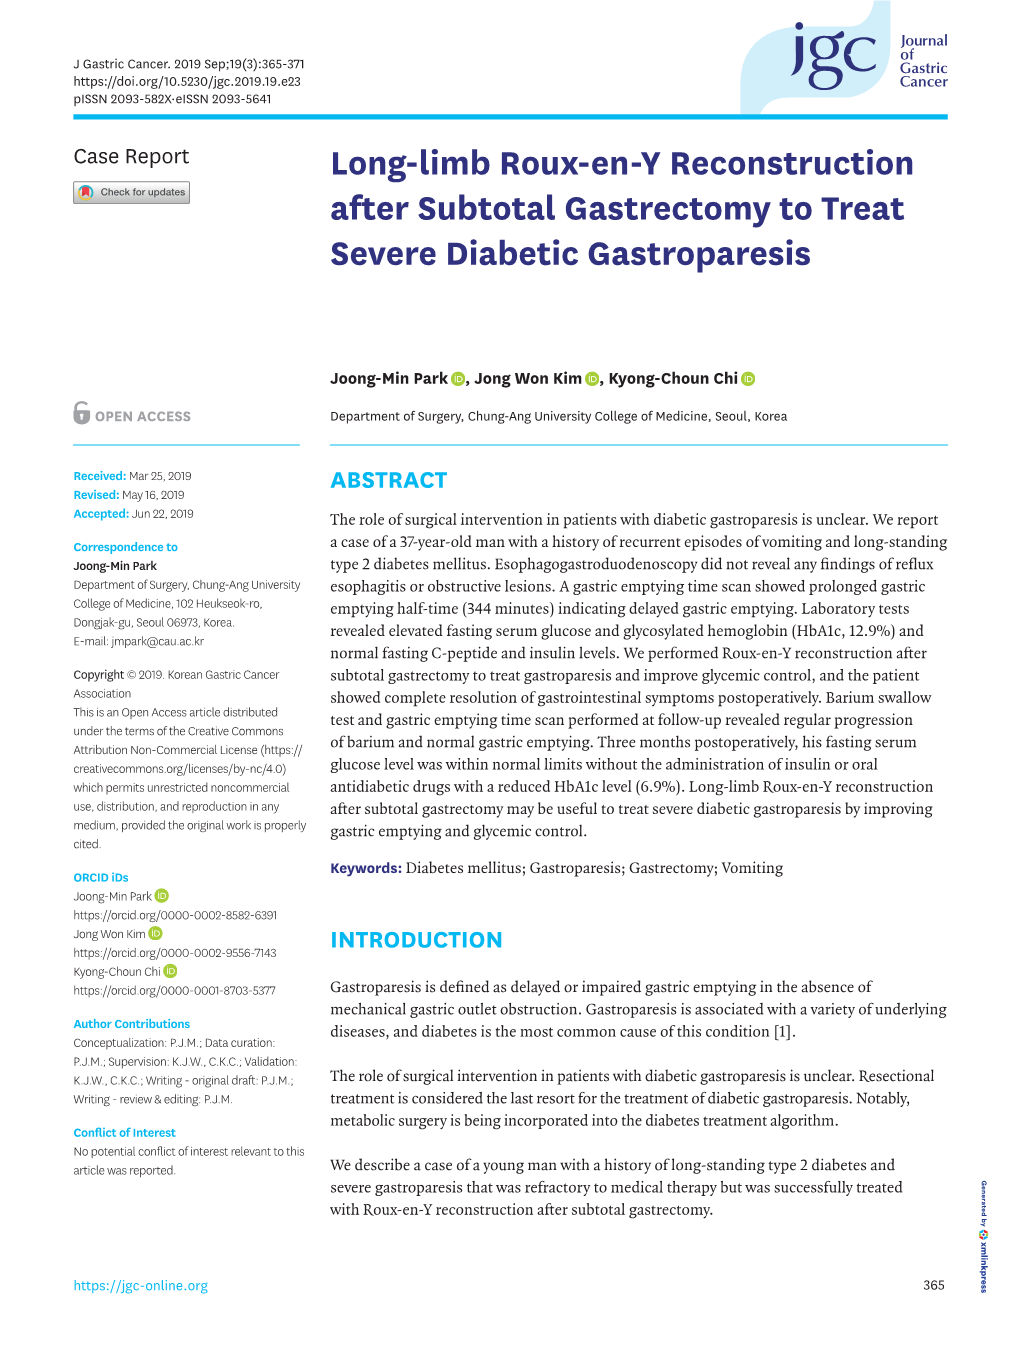 Long-Limb Roux-En-Y Reconstruction After Subtotal Gastrectomy to Treat Severe Diabetic Gastroparesis